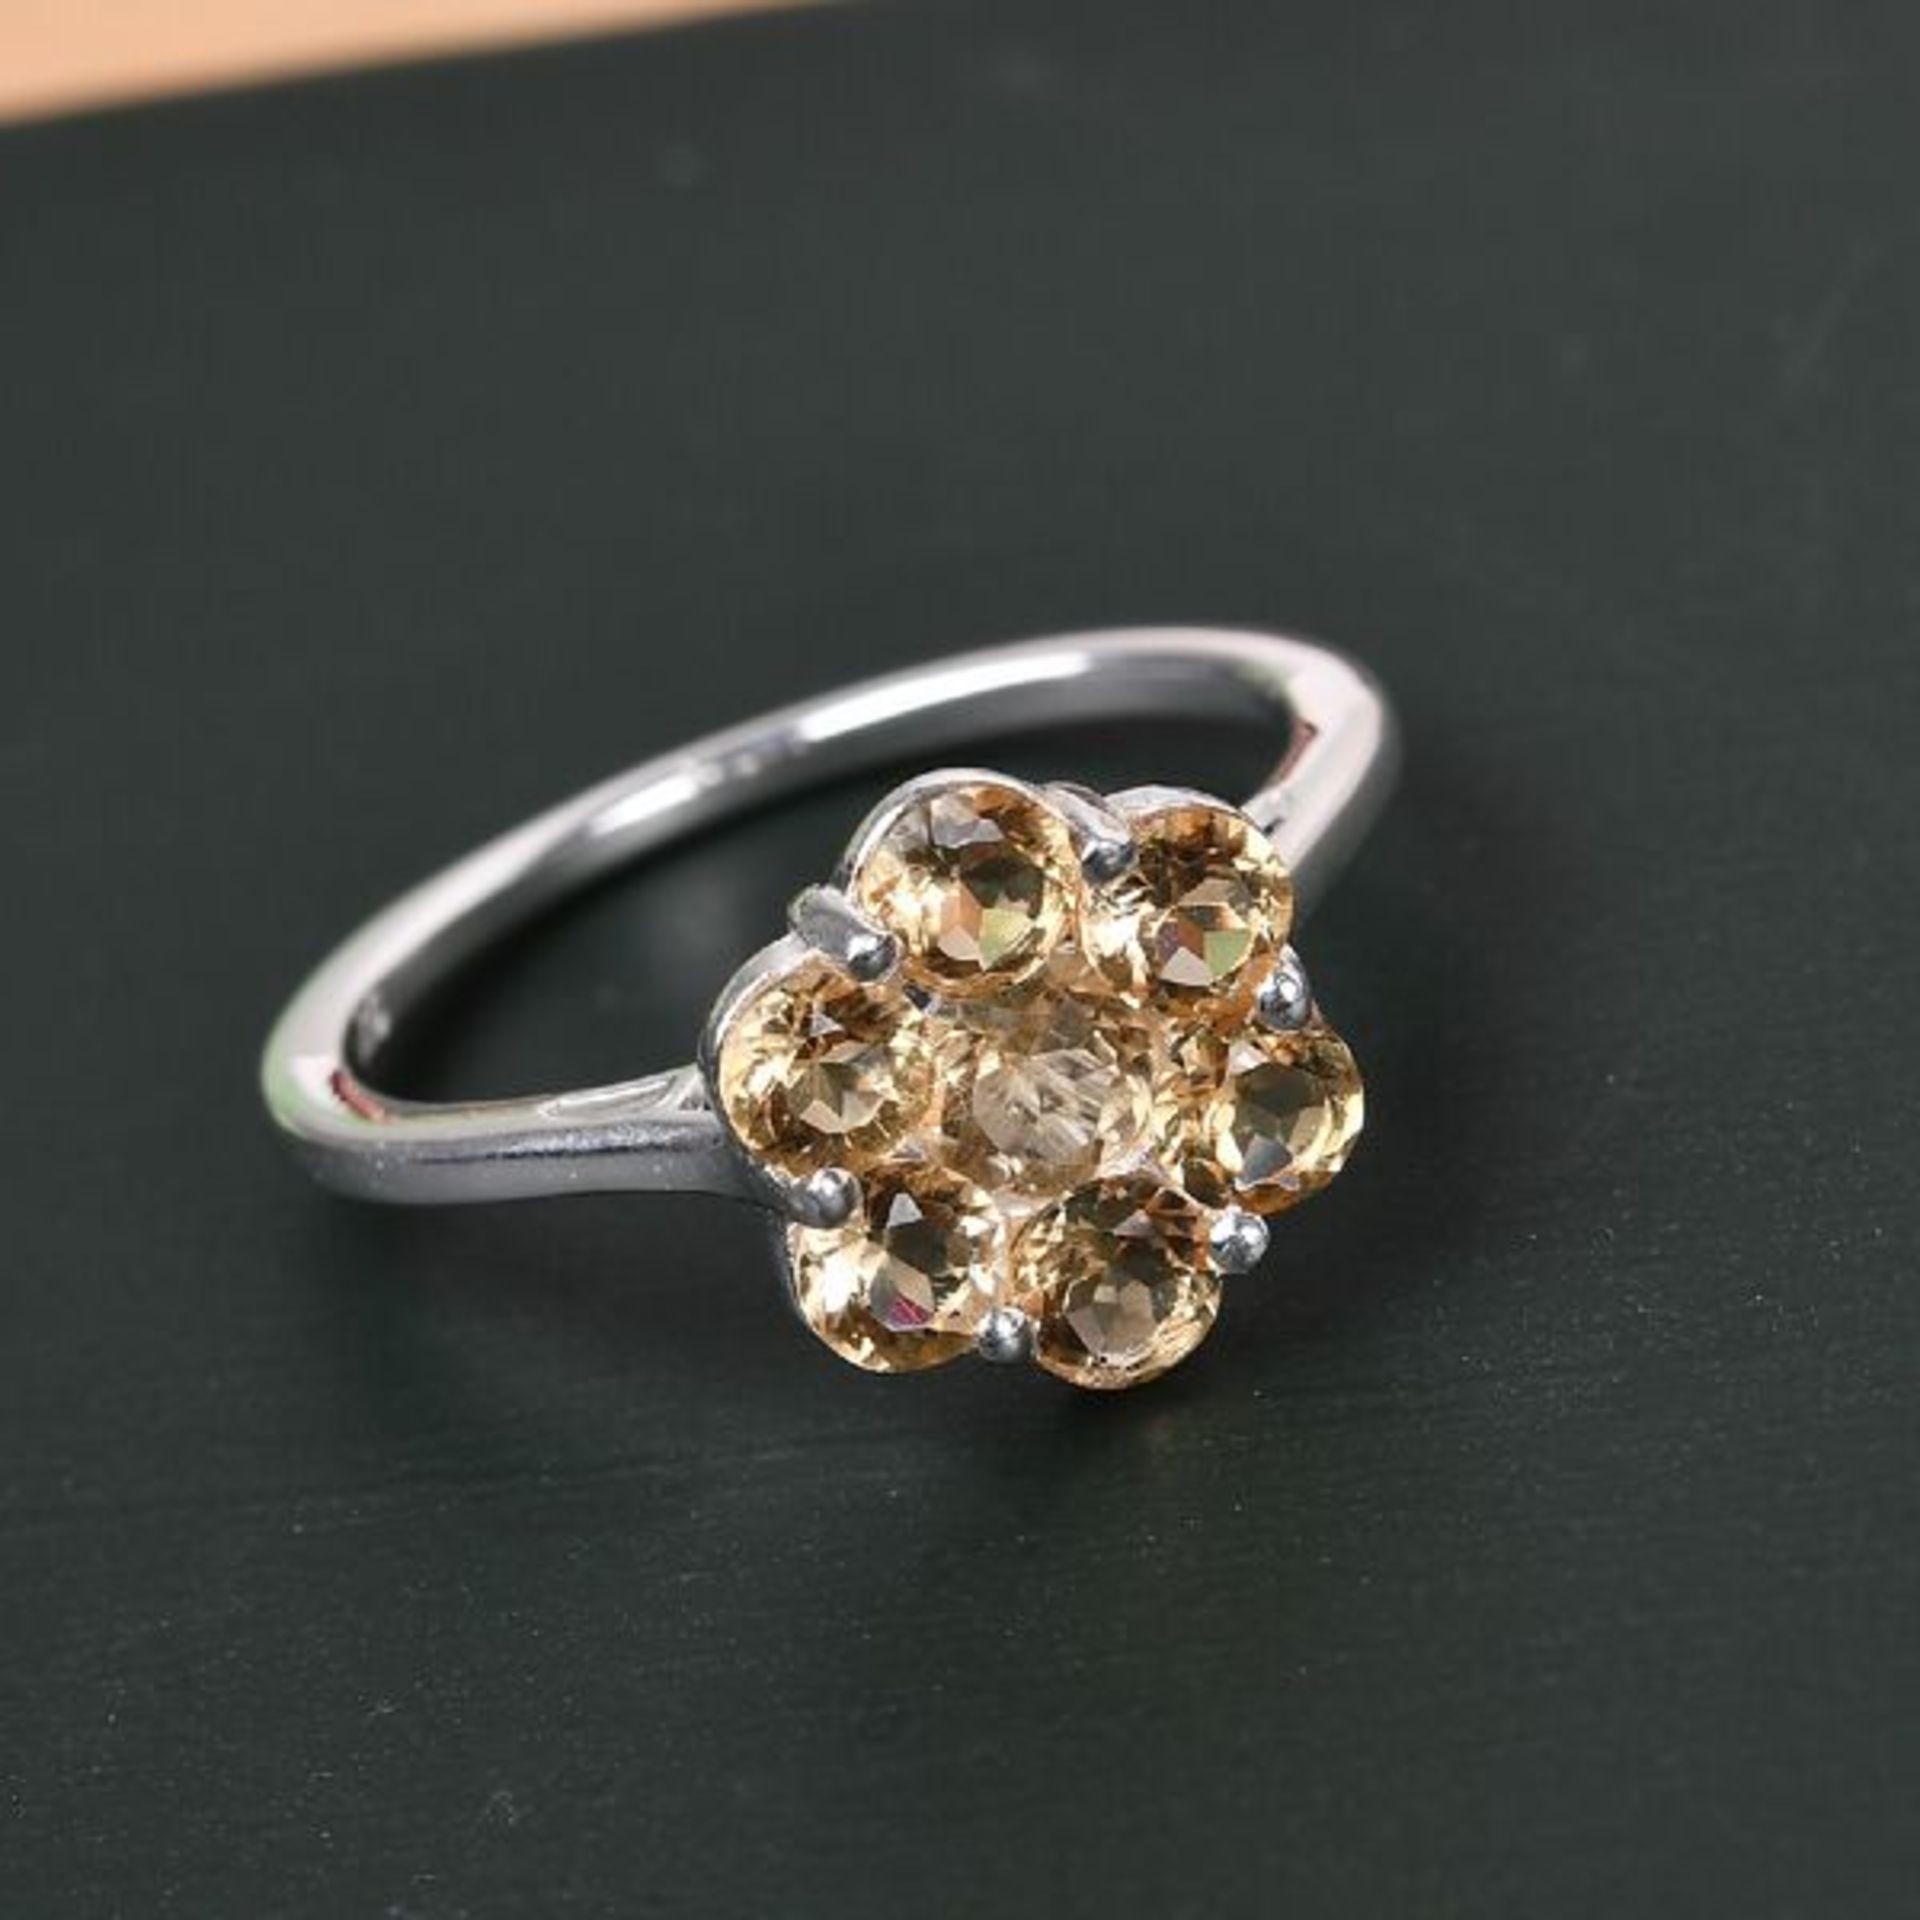 NEW!! Citrine Floral Cluster Ring, Earrings & Bracelet in Sterling Silver